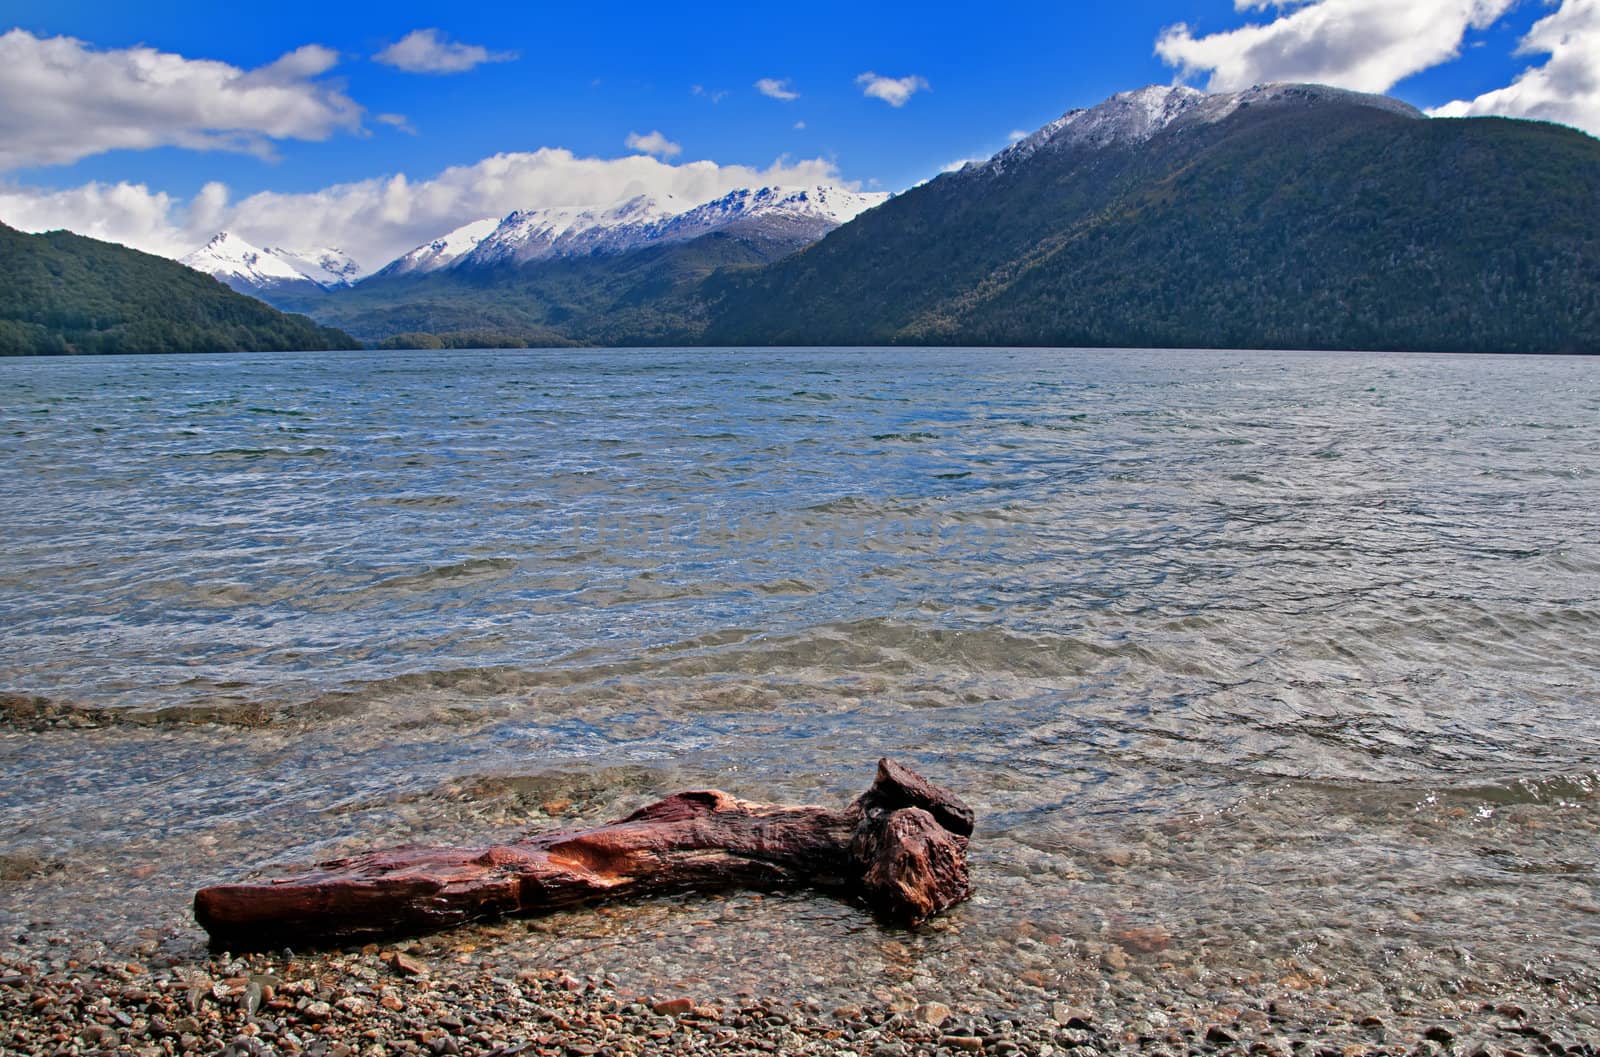 Washed up log at Lago (Lake) Nahuel Huap in Argentina